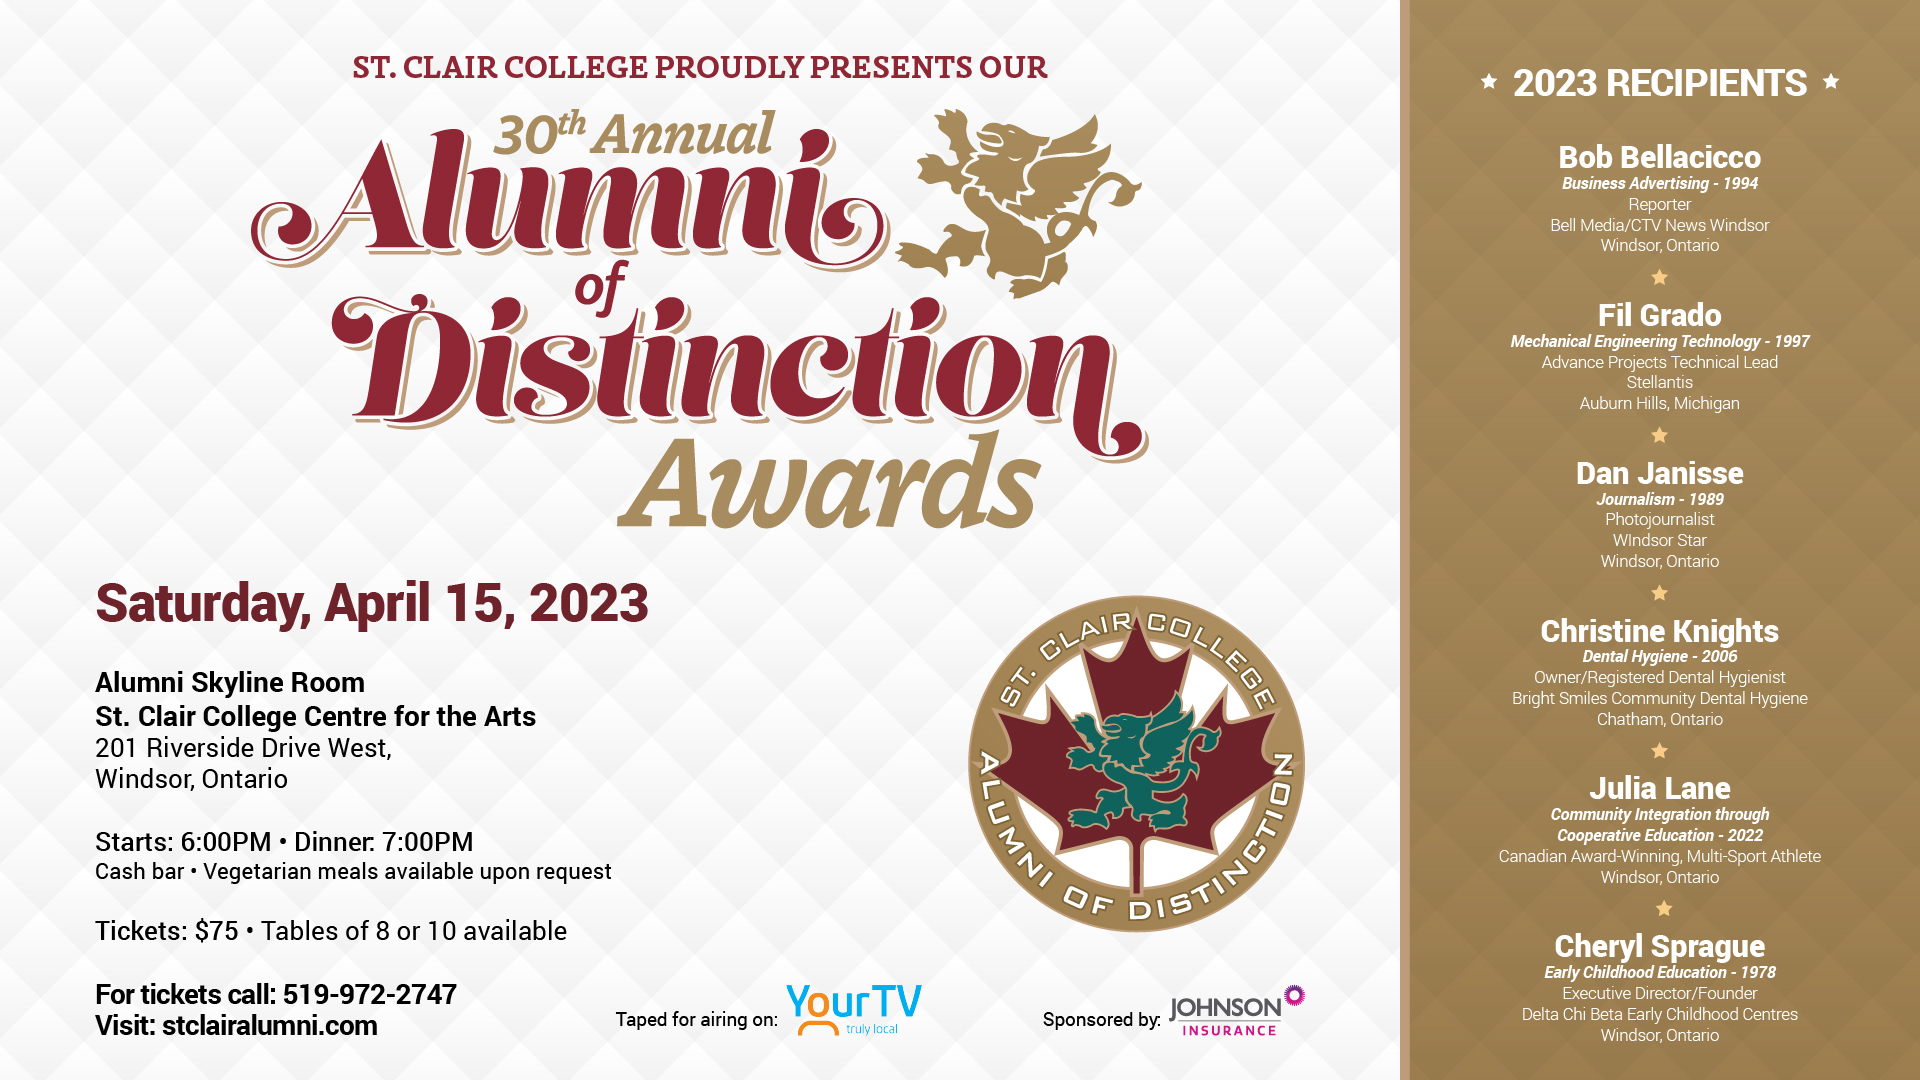 30th Annual Alumni of Distinction Awards